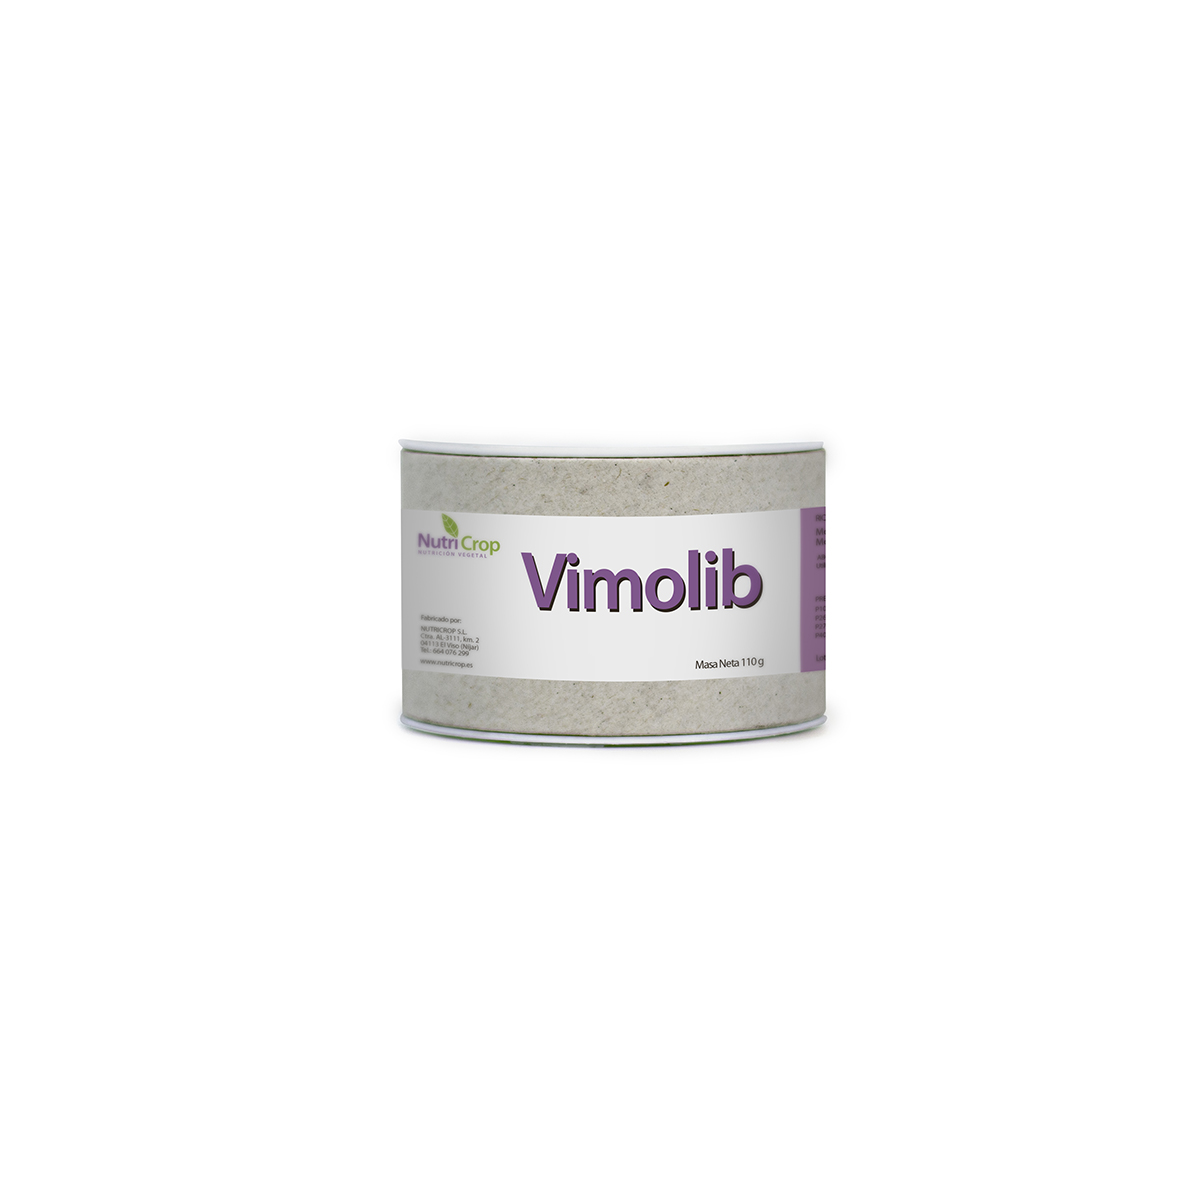 Vimolib - Nutricrop